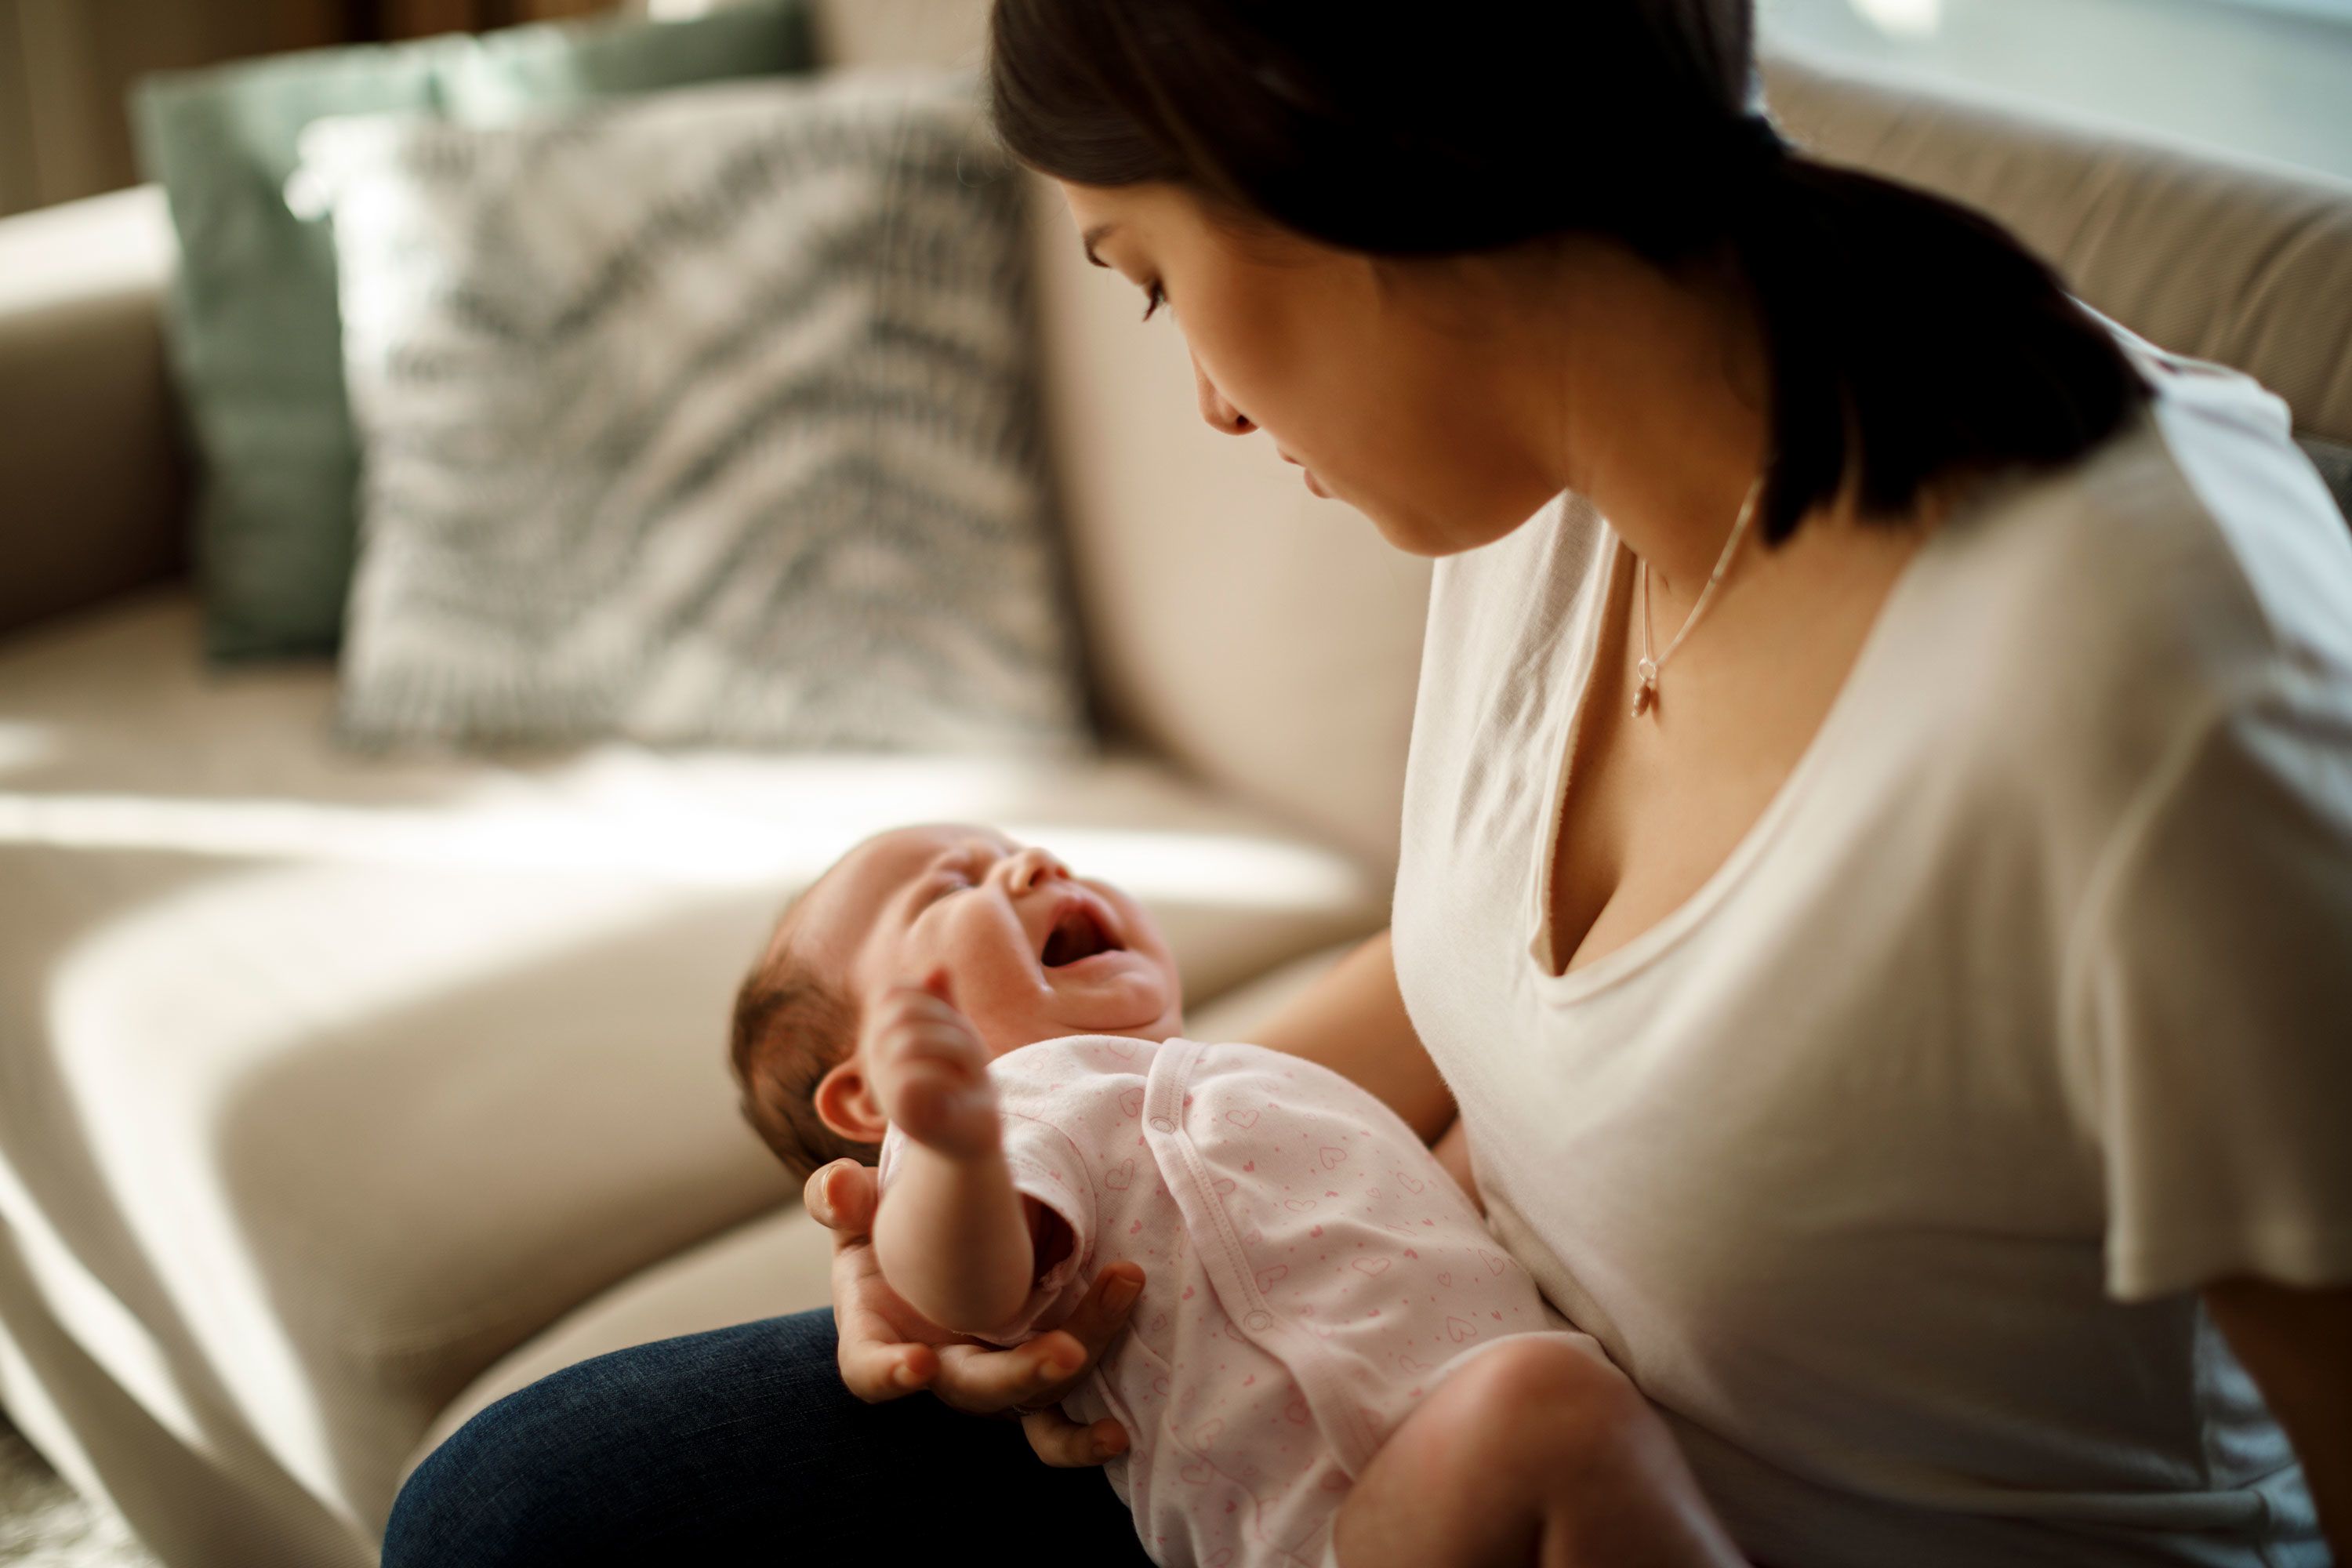 https://media.cnn.com/api/v1/images/stellar/prod/230921152319-mother-baby-postpartum-depression-wellness-stock-restricted.jpg?c=original